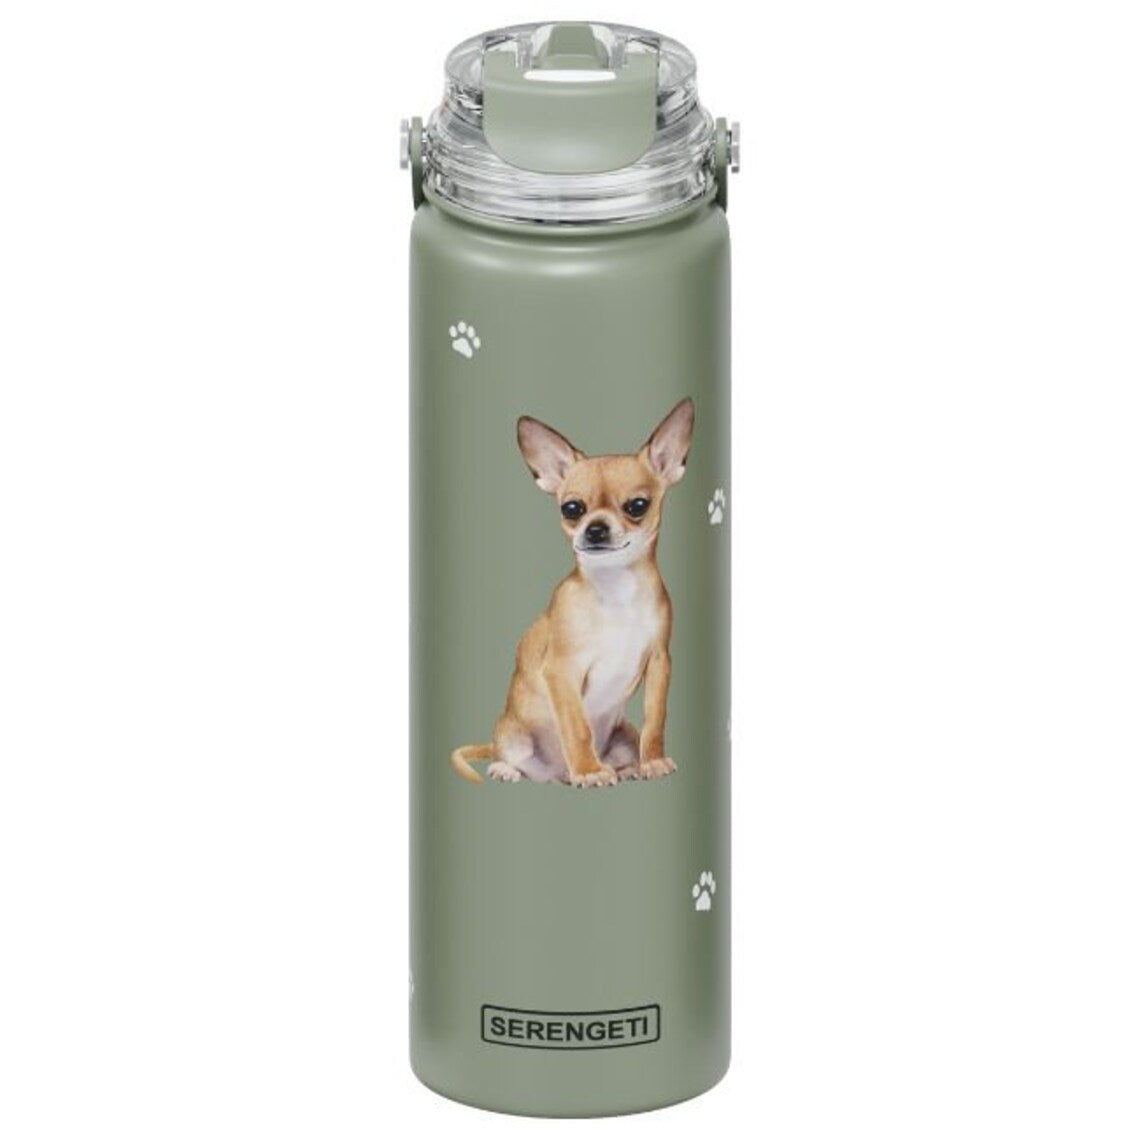 SERENGETI Stainless Steel Water Bottle 24oz - Chihuahua Tan